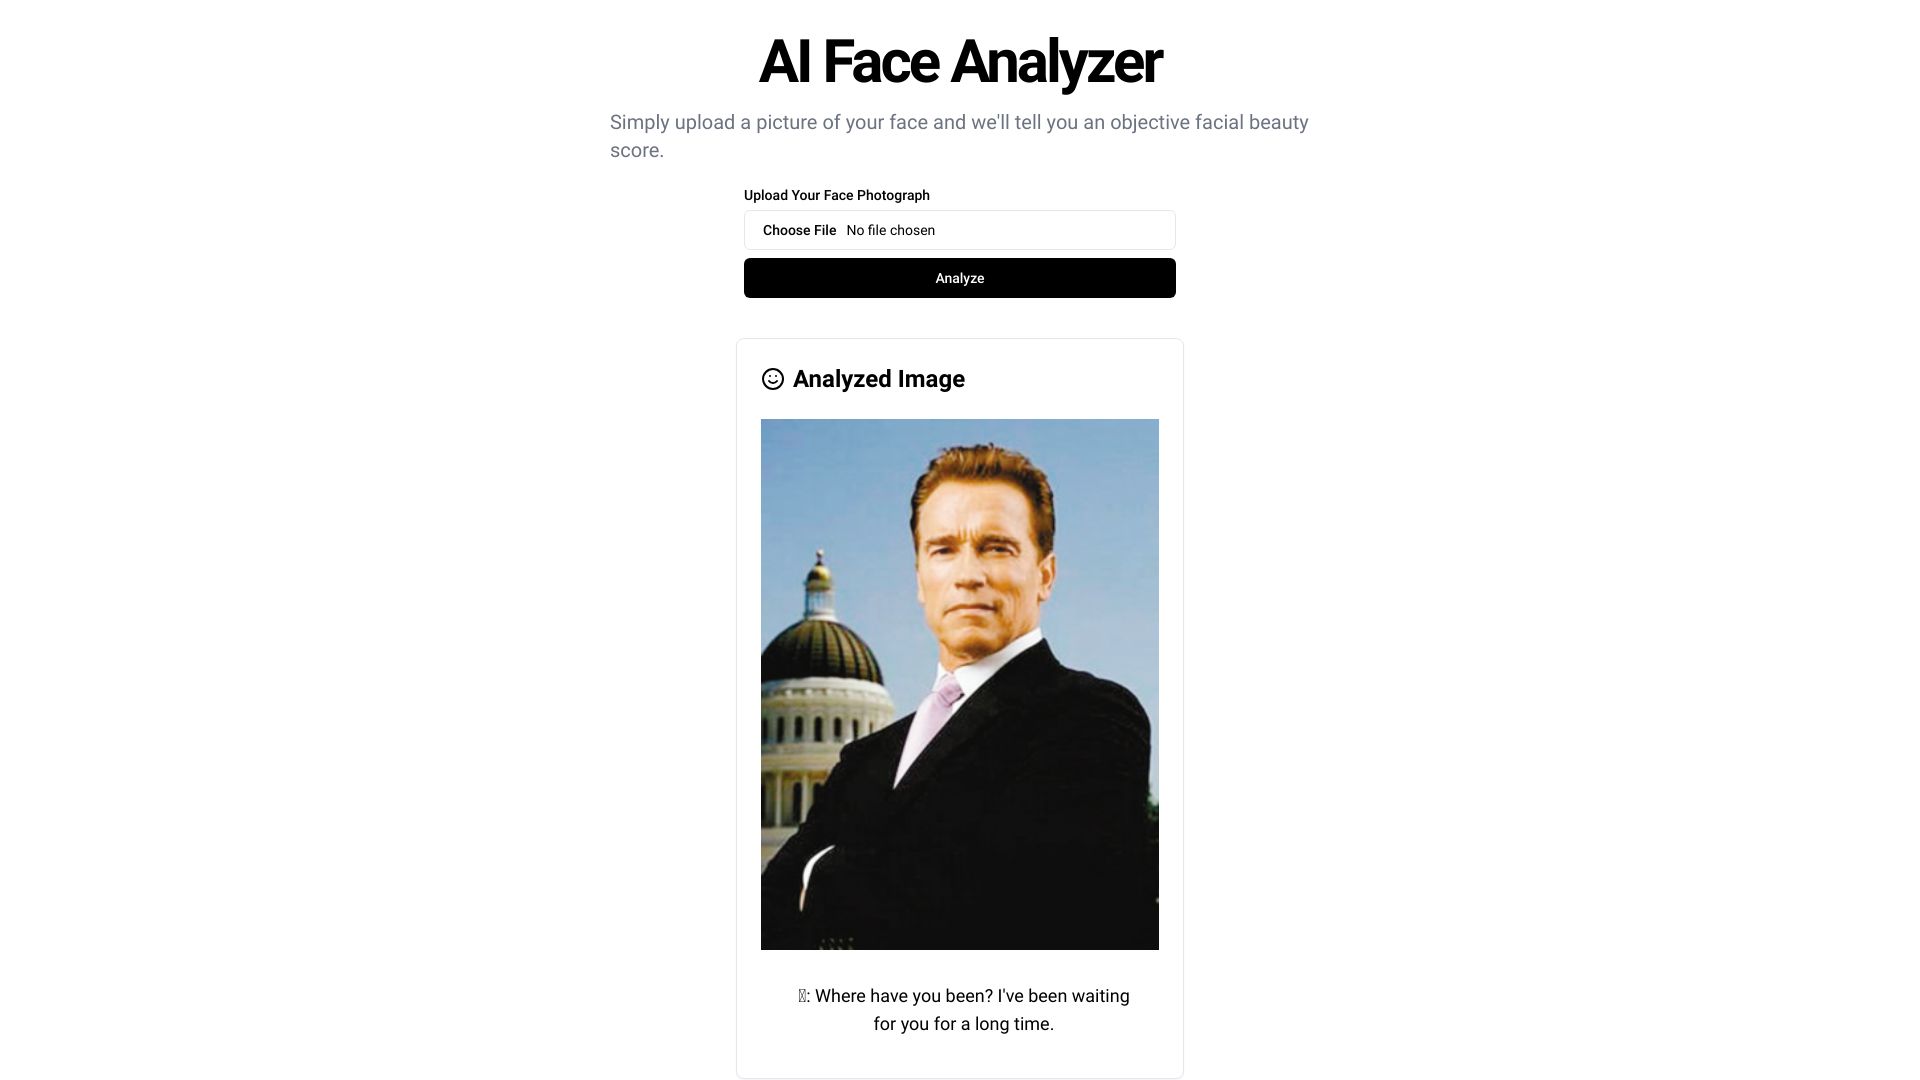 AI Face Analyzer-Beauty Score Calculator